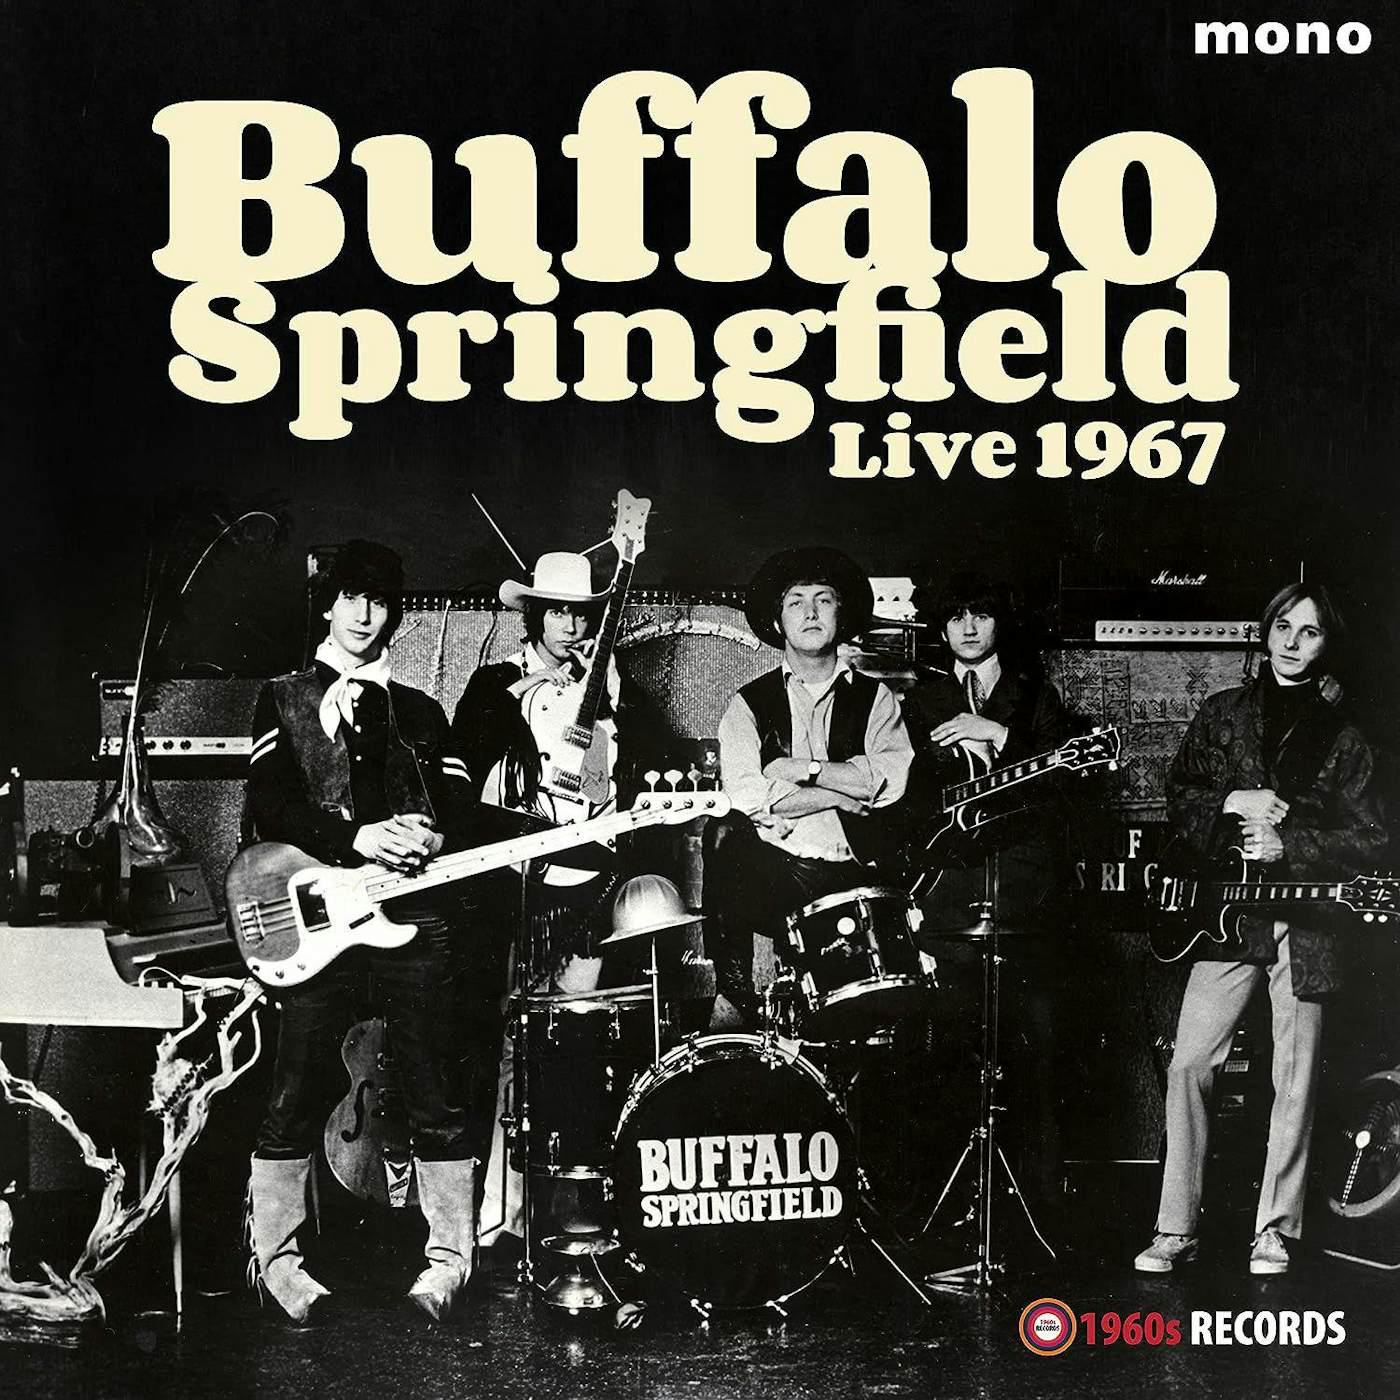 Buffalo Springfield LP Vinyl Record - Live 1967